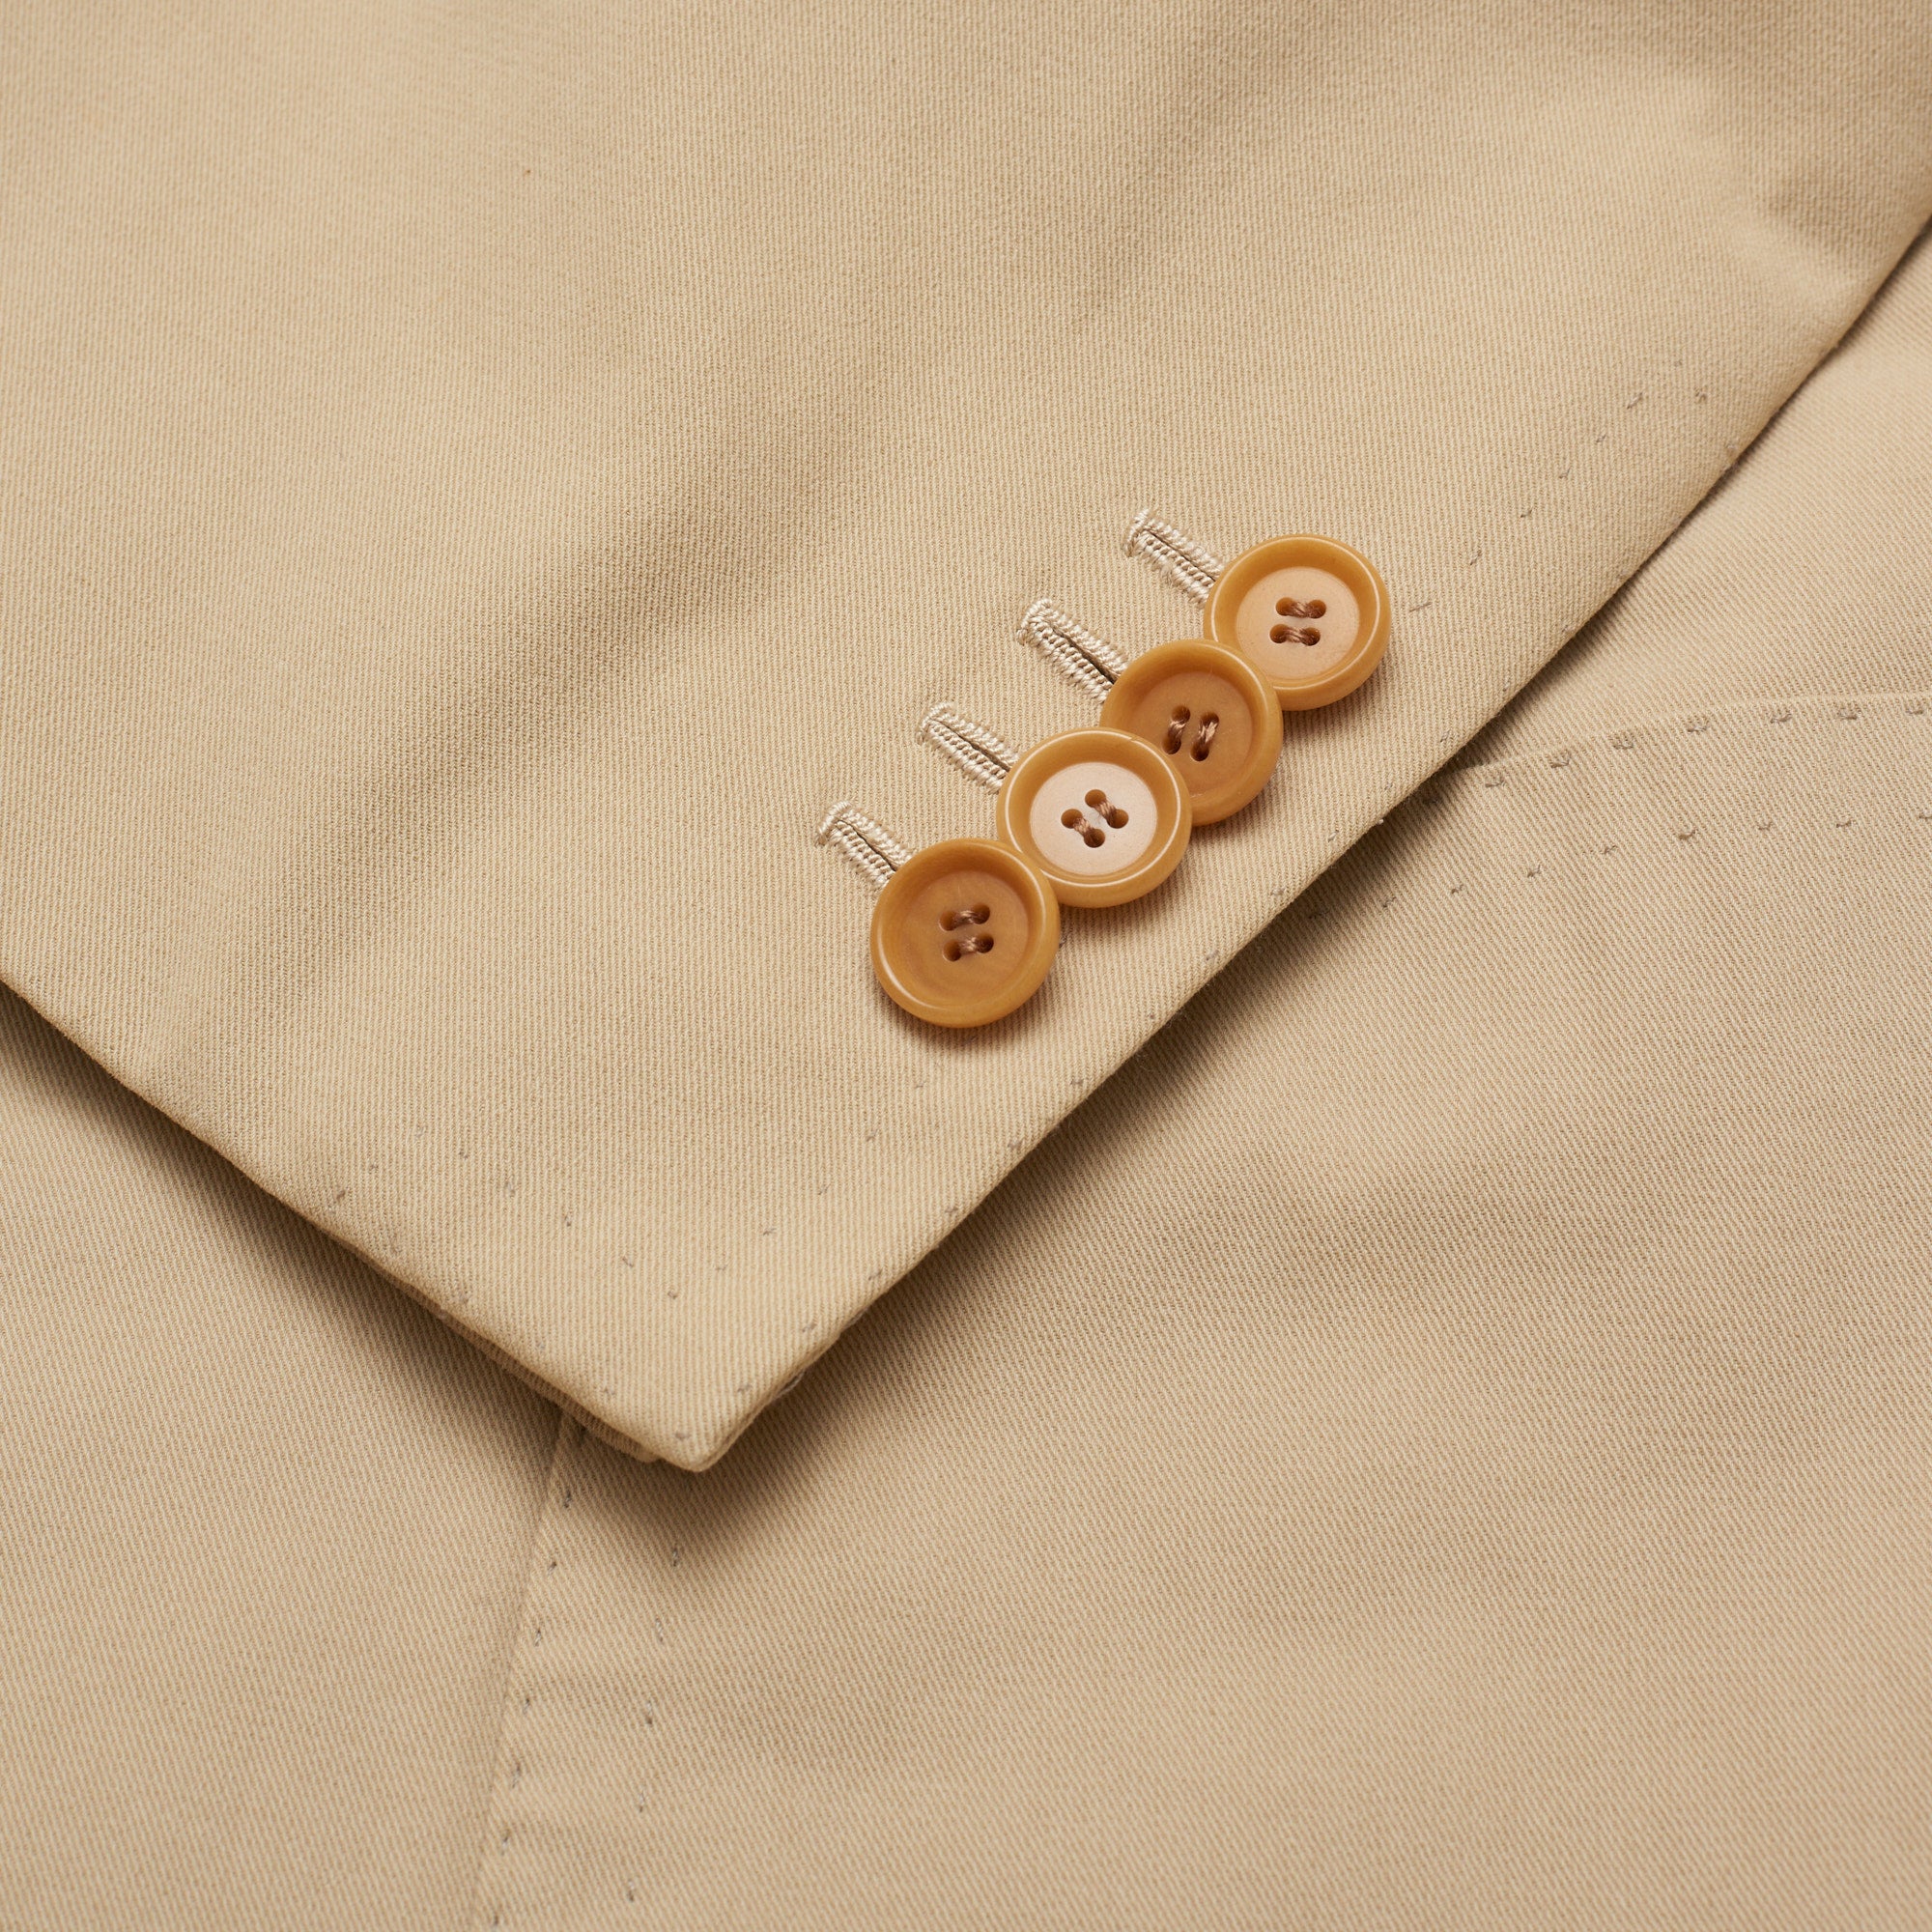 CESARE ATTOLINI Napoli Handmade Beige Twill Cotton Suit EU 54 US 44 Slim Regular Fit